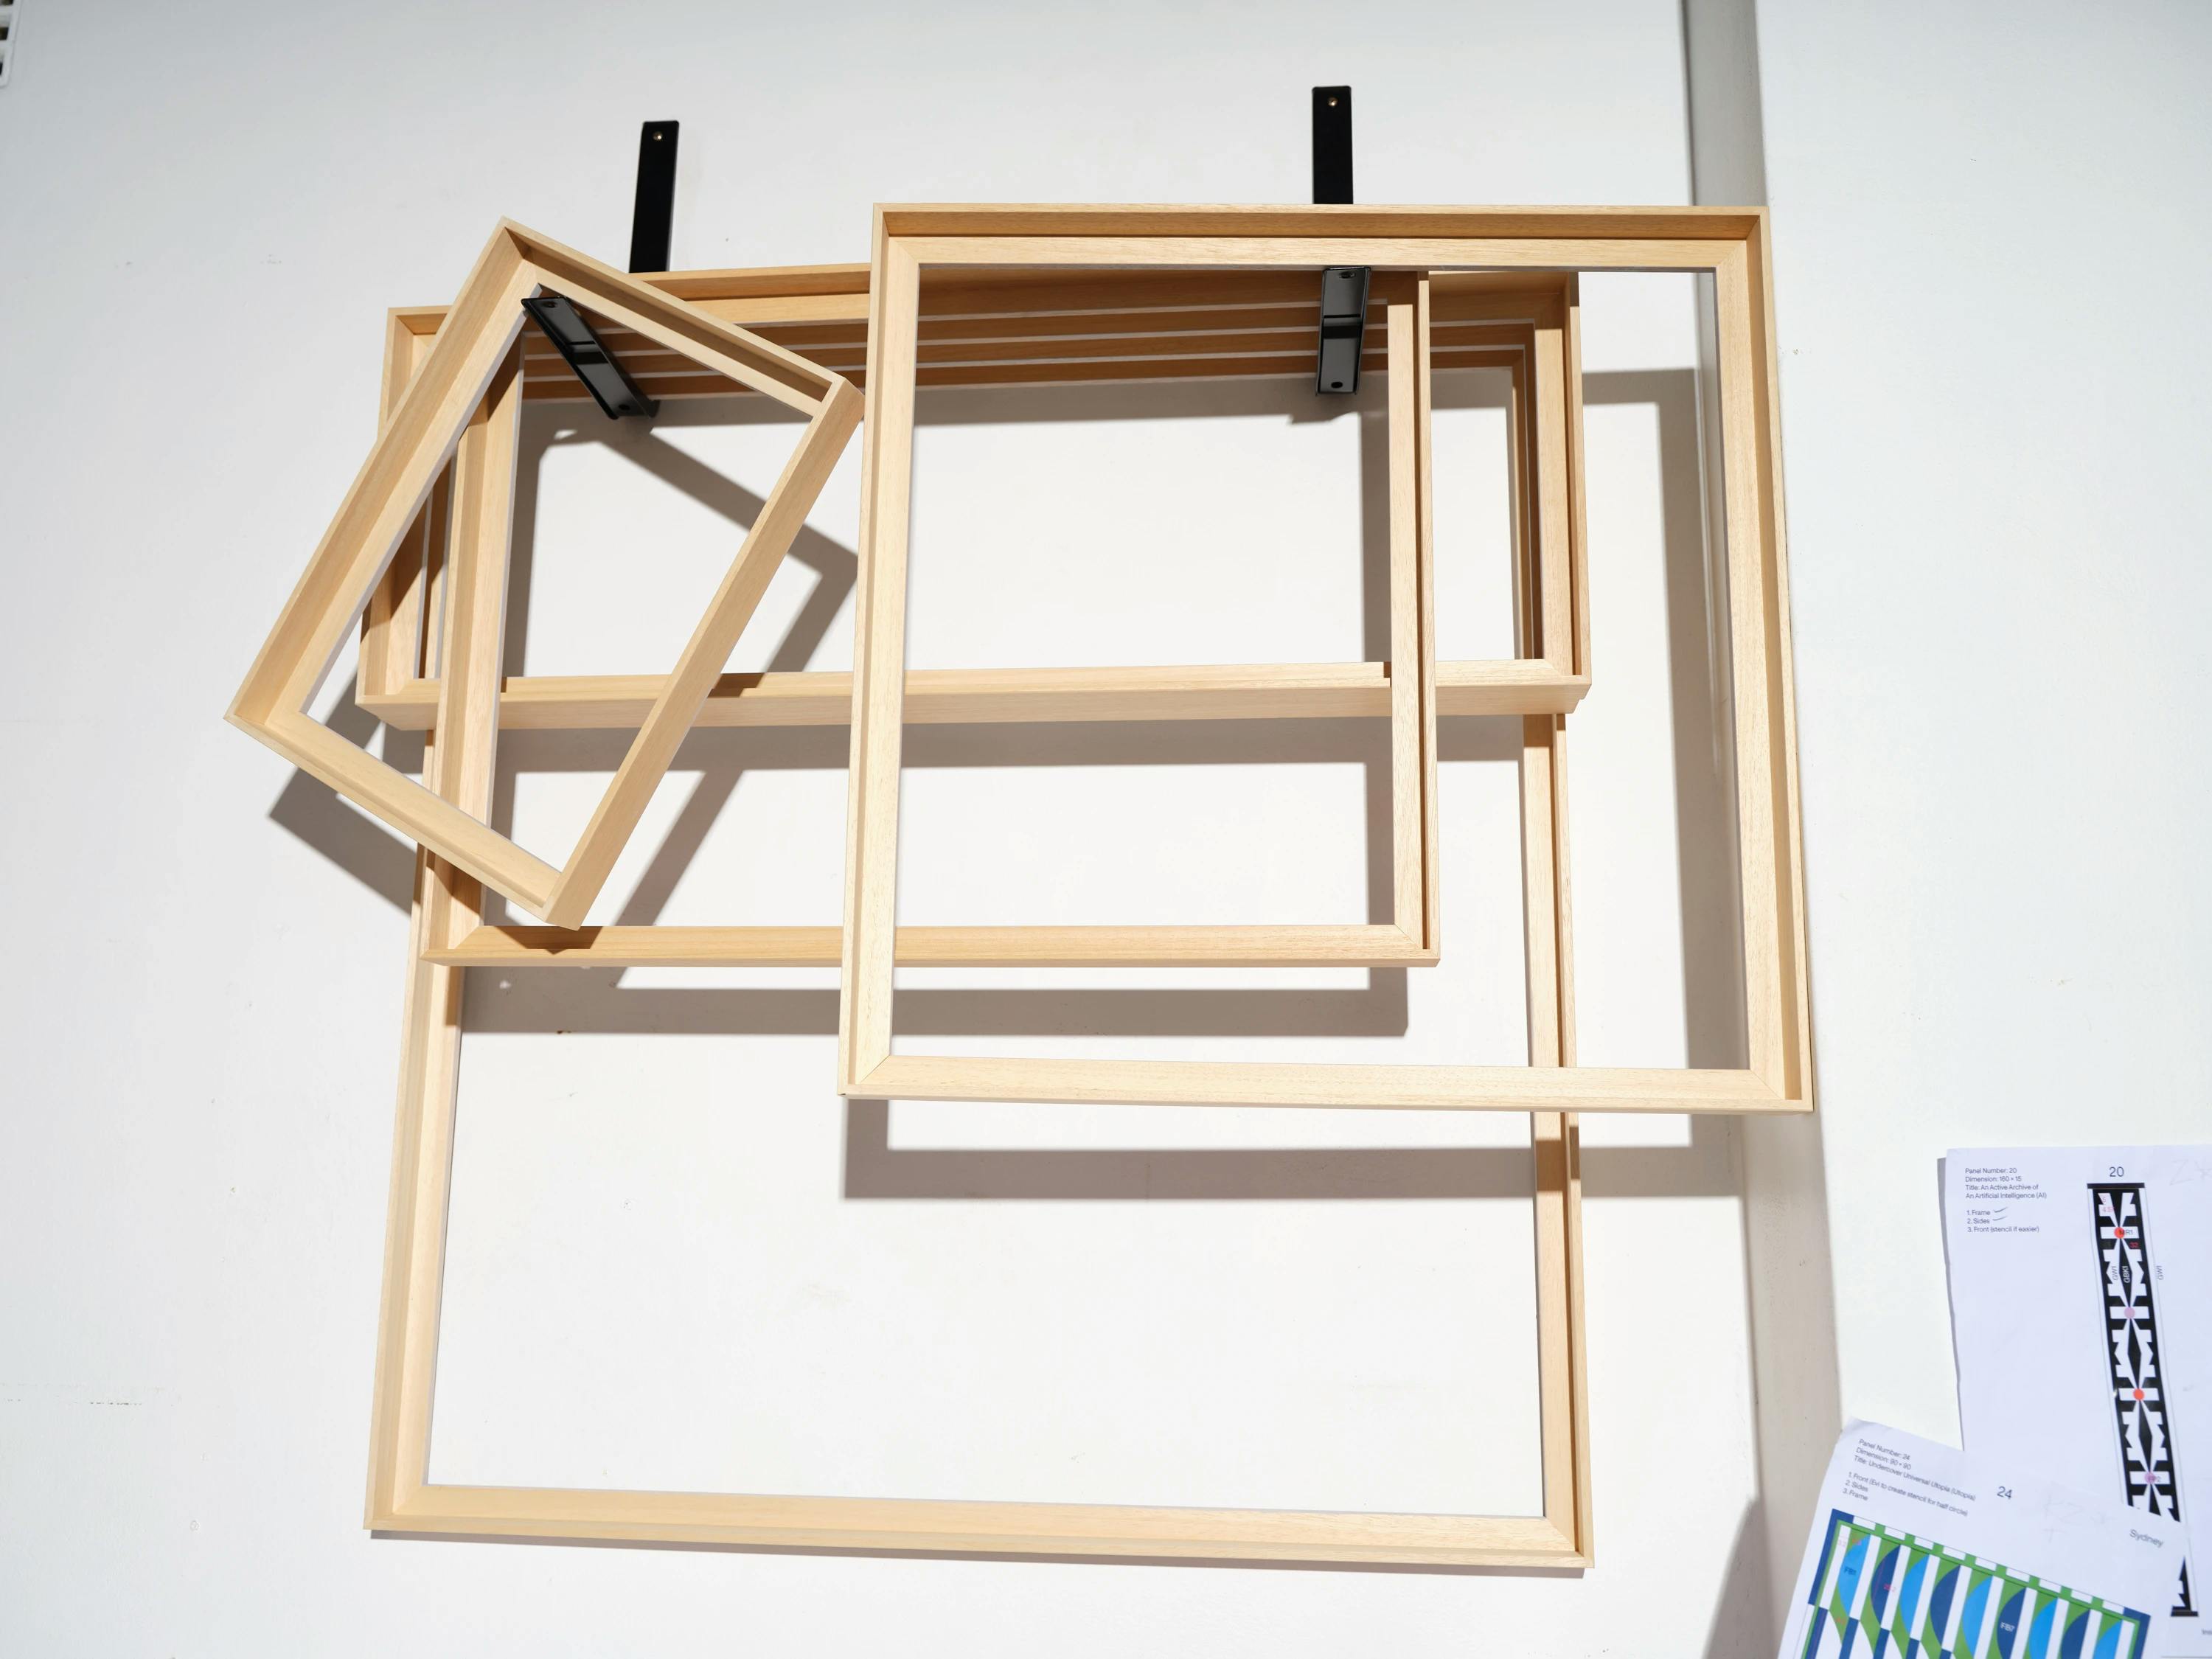 Five unpainted wooden floater frames hanging in Evi O's studio.